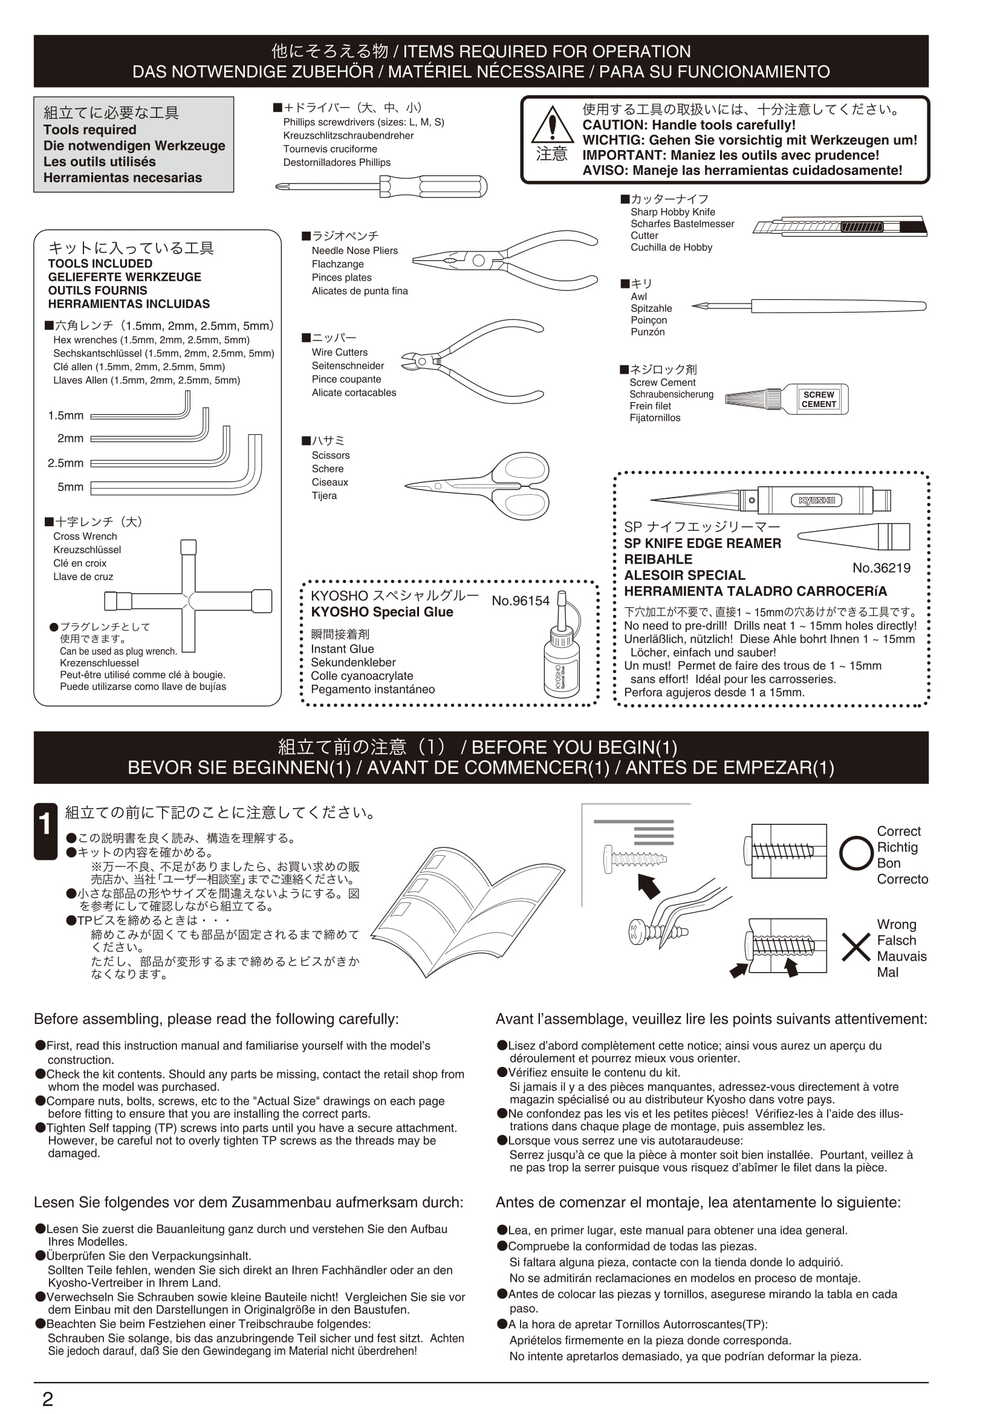 Kyosho - 31096F DBX - Manual - Page 02